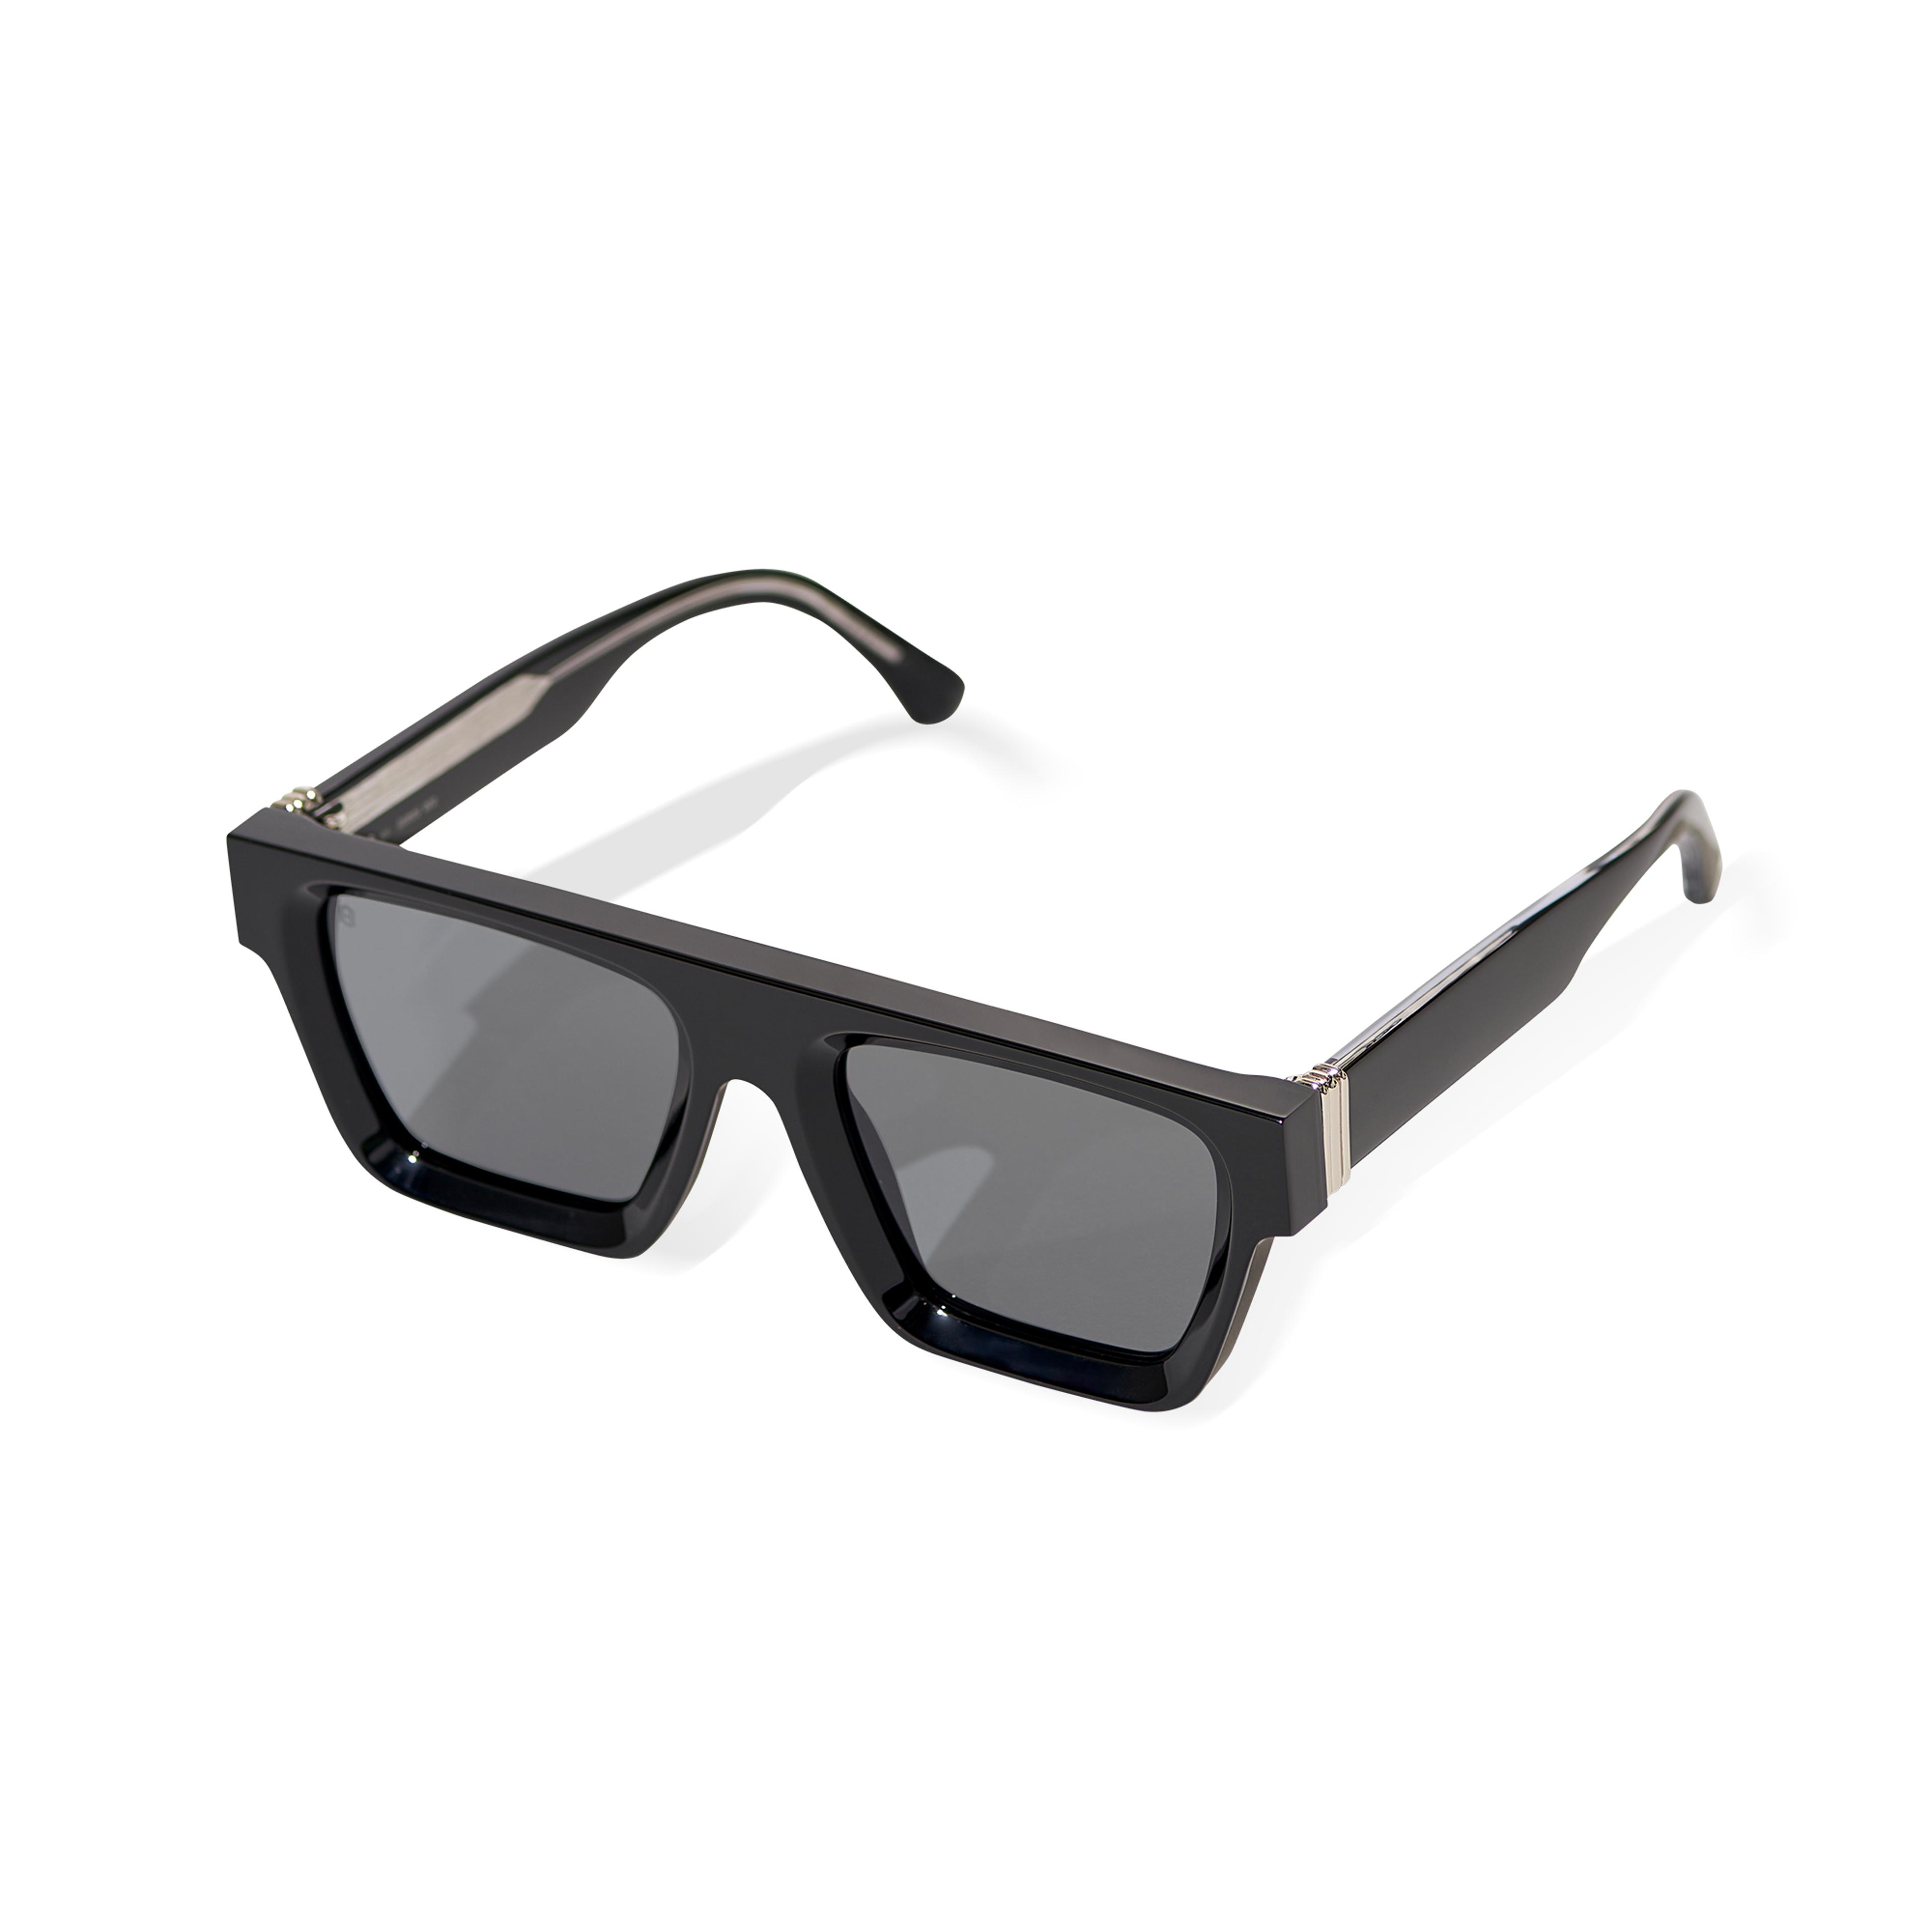 Ben Baller x James Oro Sunglasses: Black Bosch